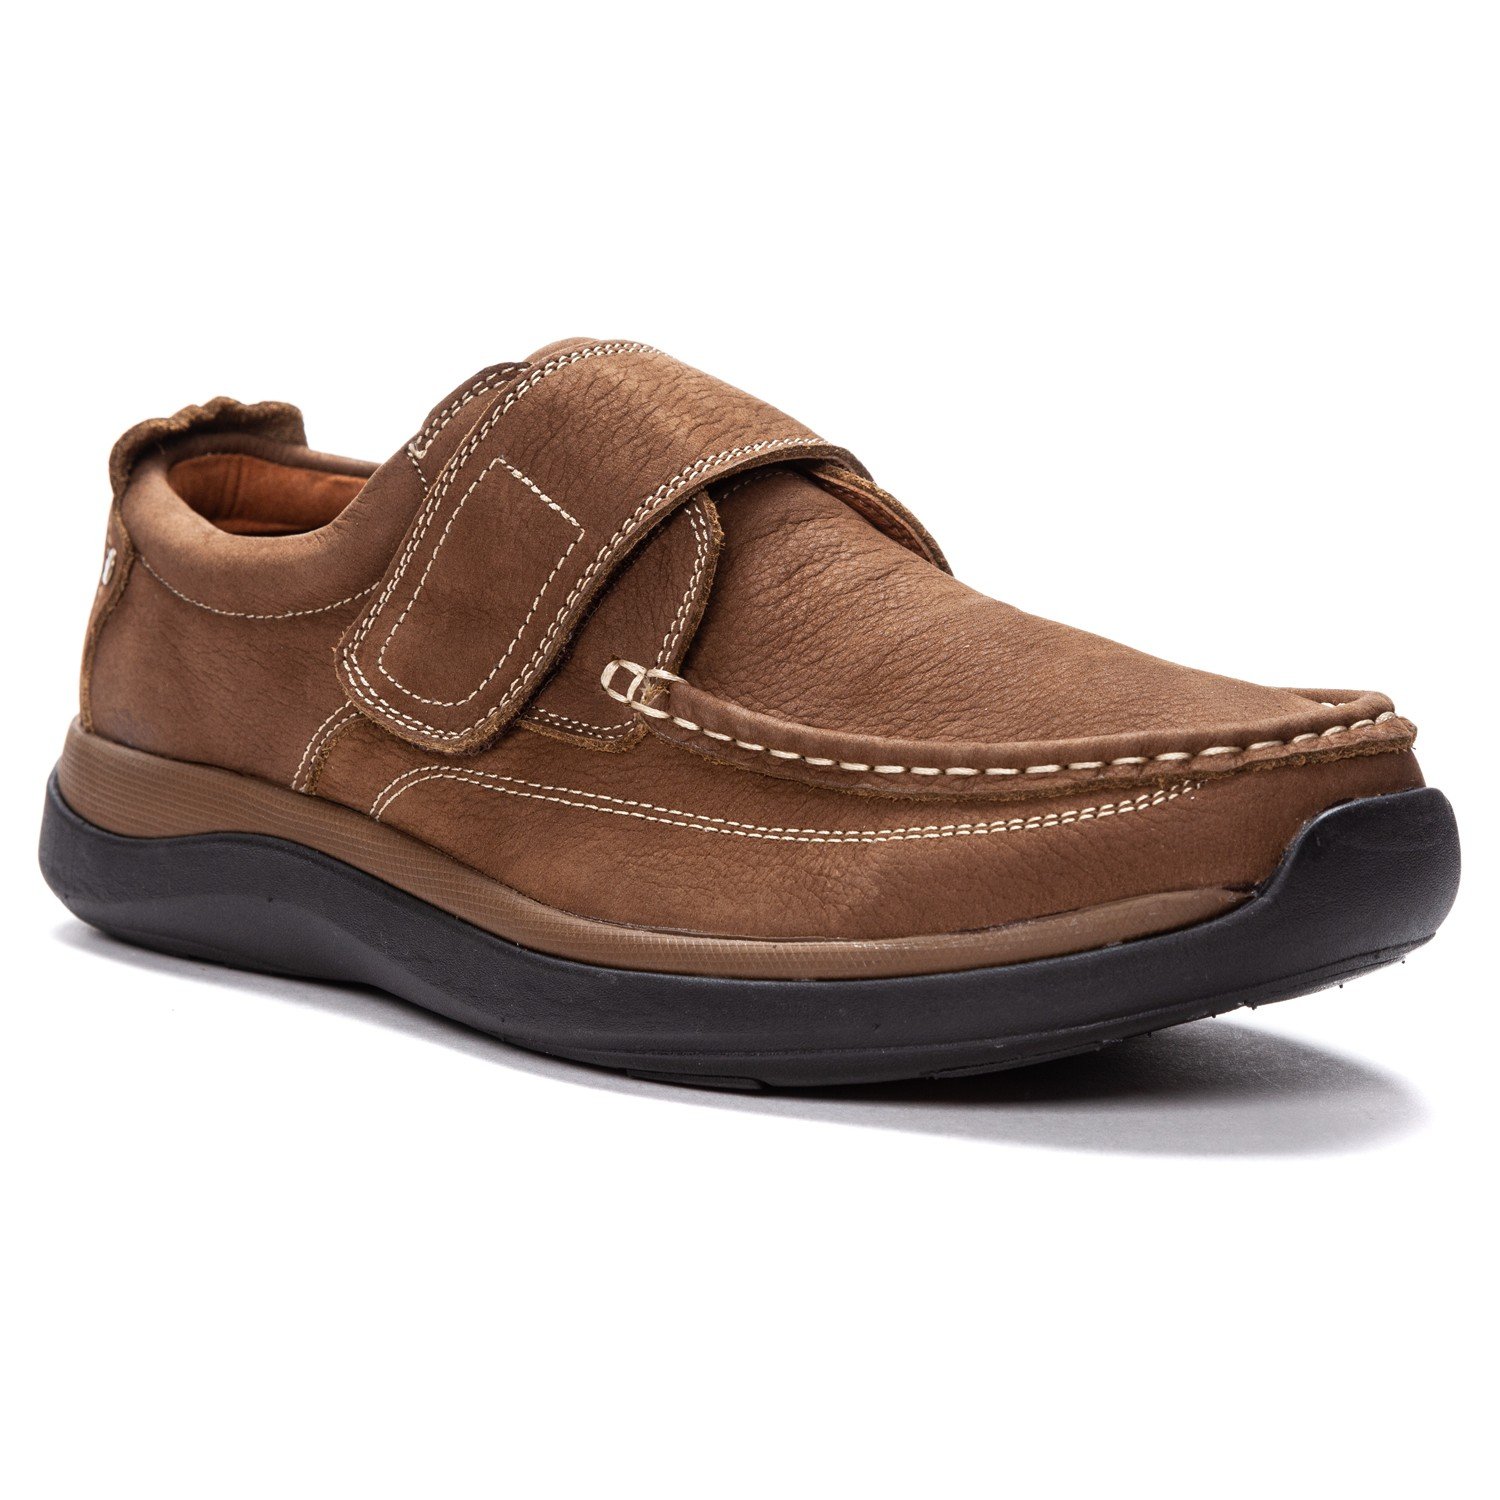 Propet Men's Porter Loafer Casual Shoes - image 1 of 6